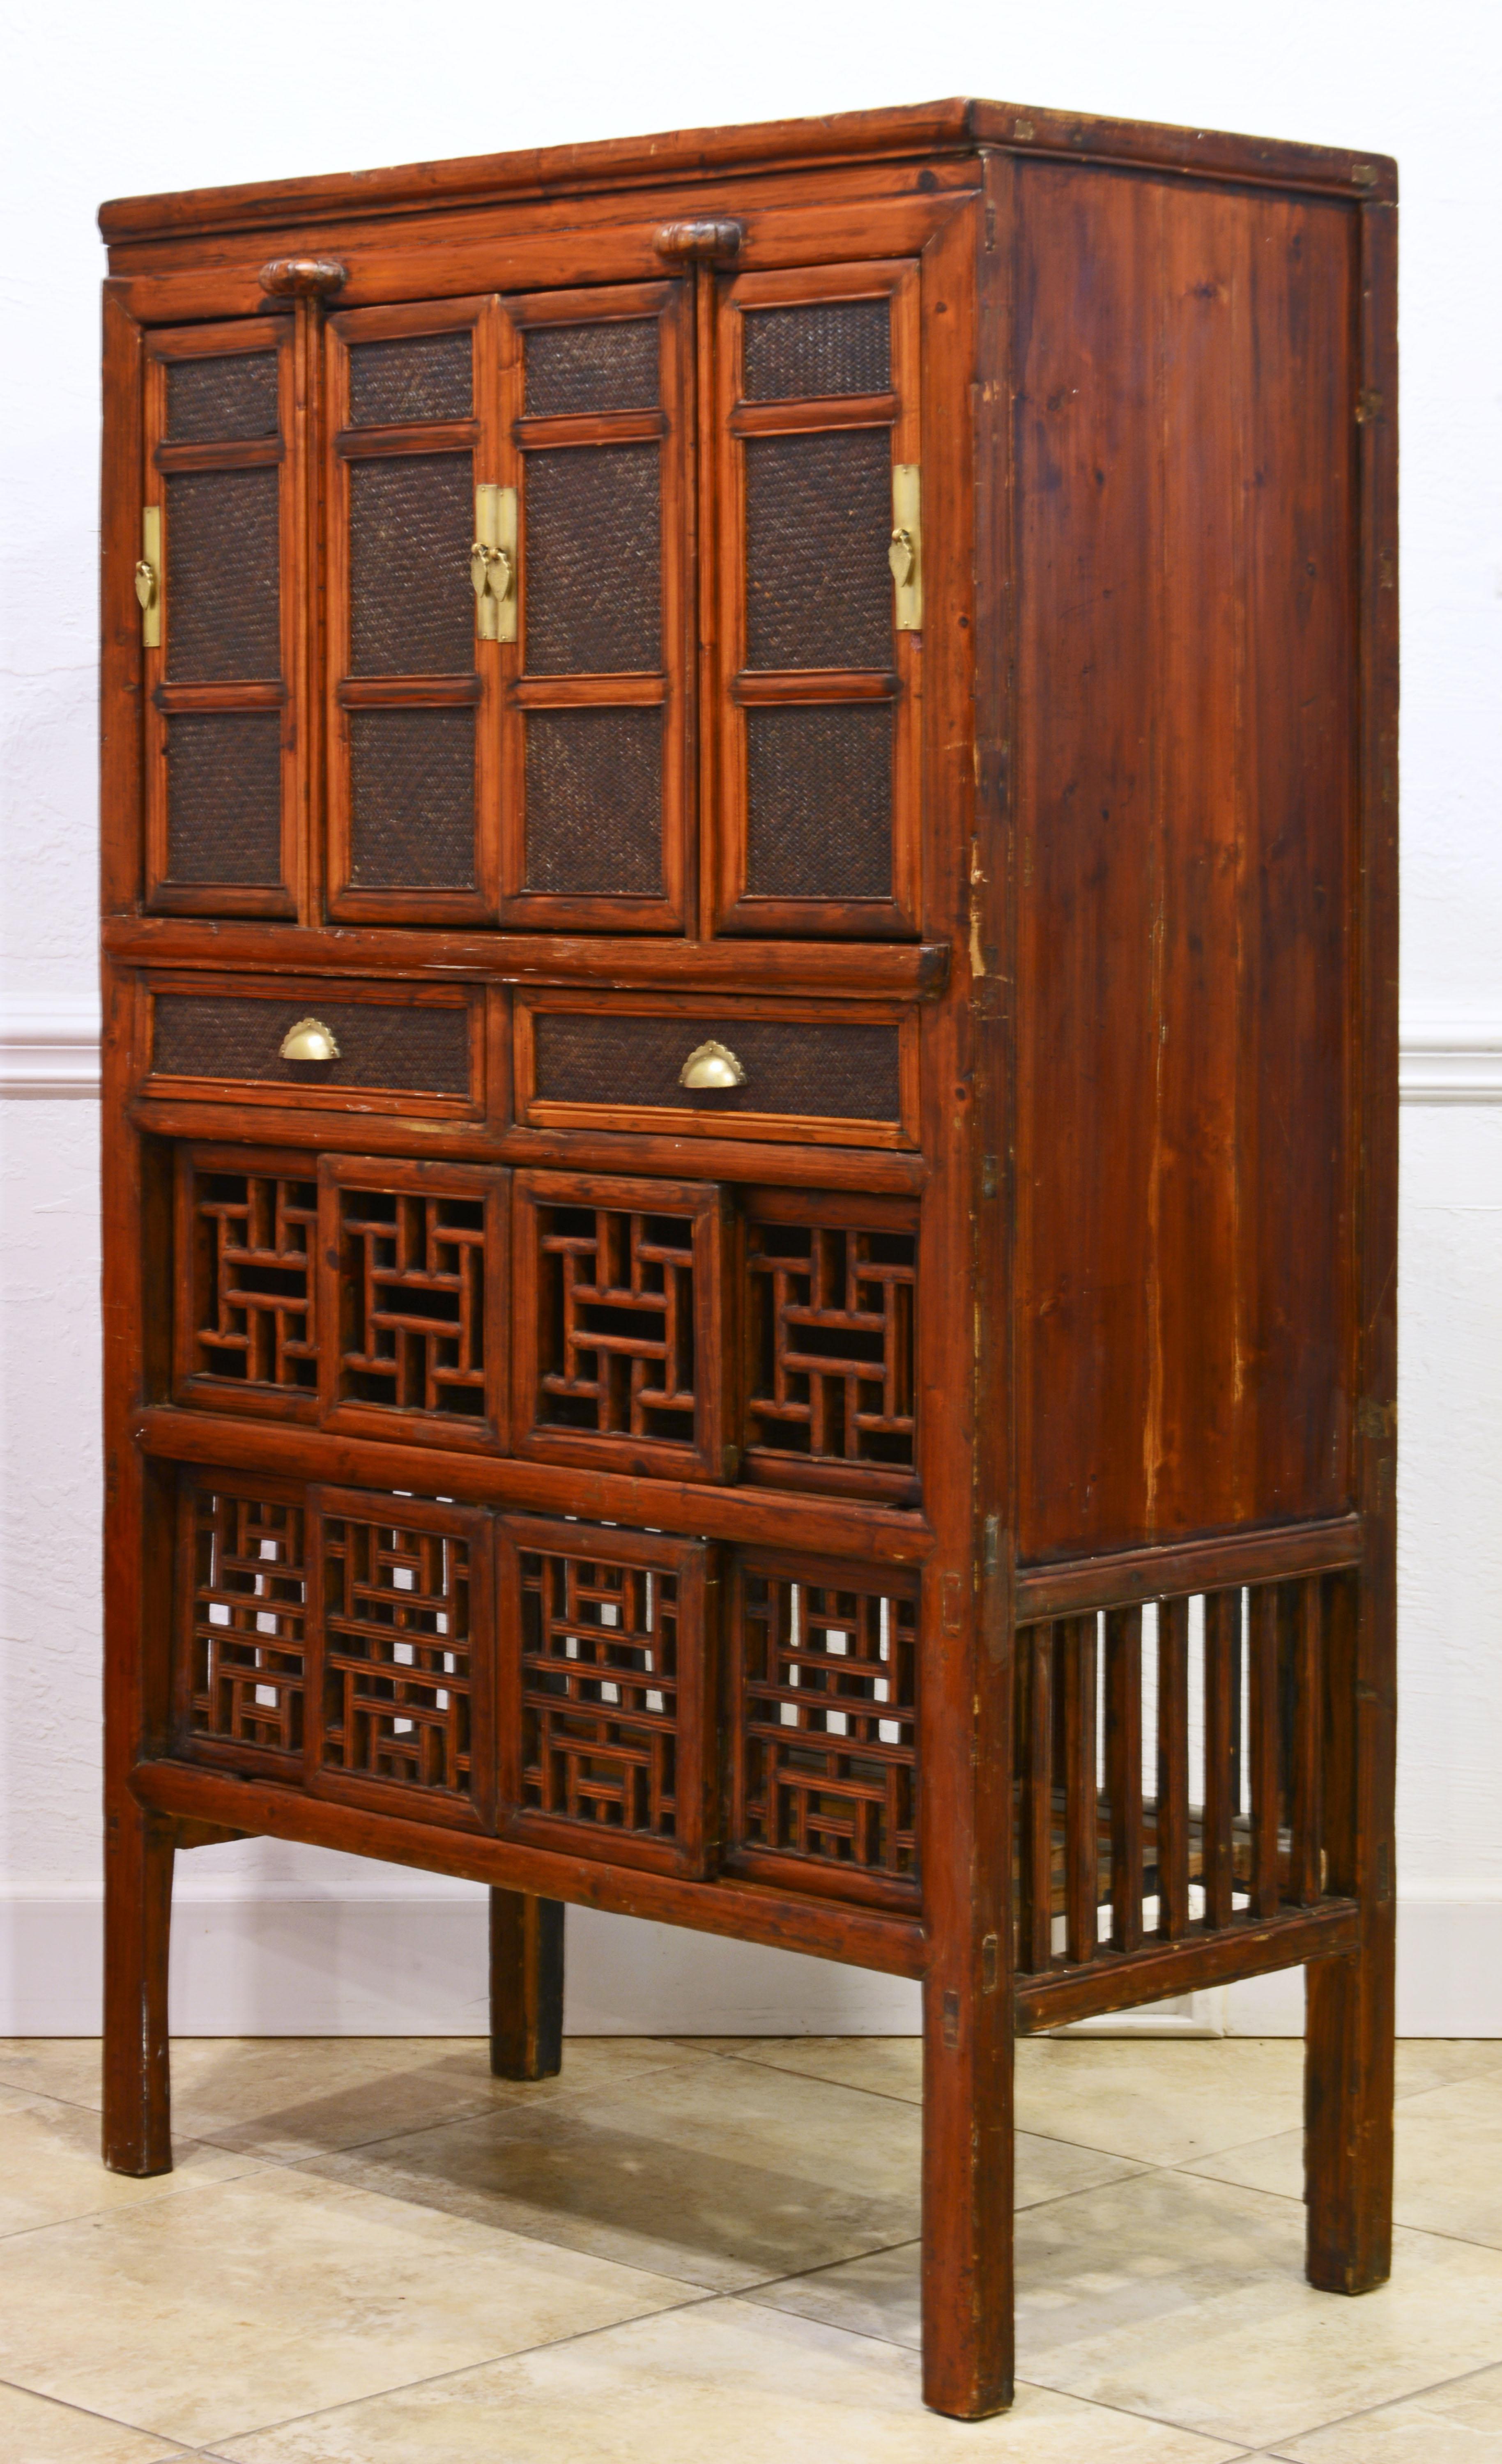 19th century kitchen cabinets